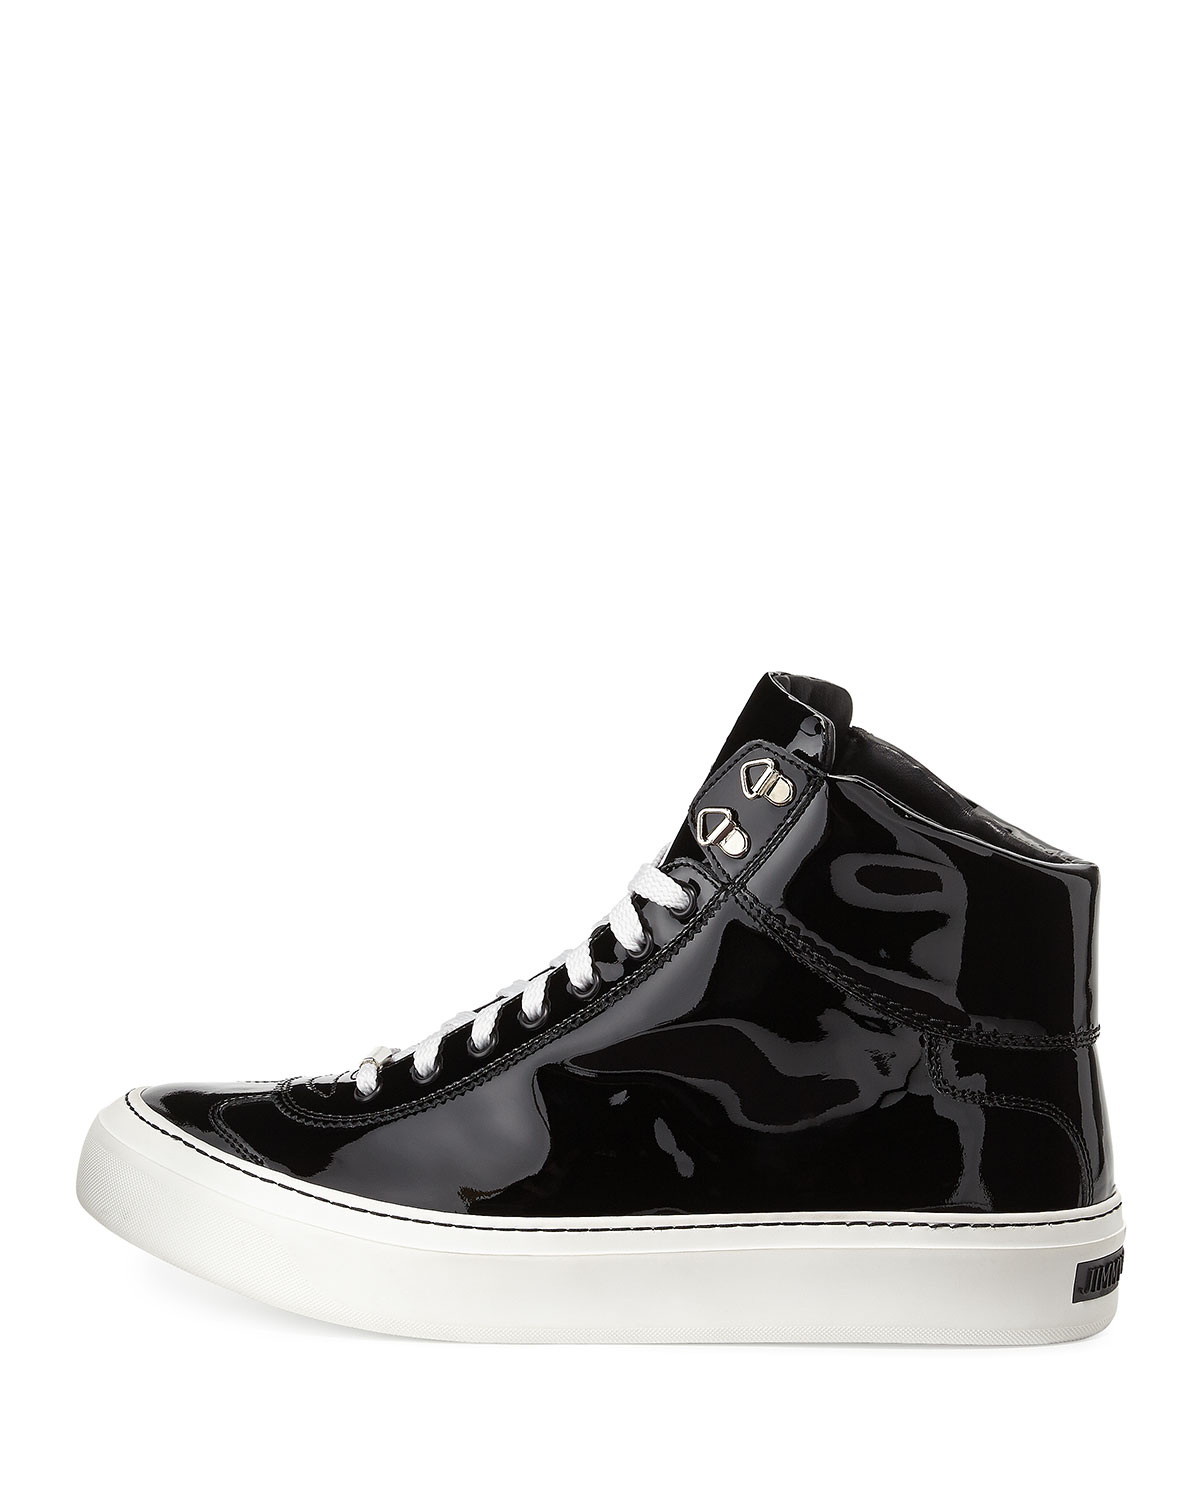 Lyst - Jimmy Choo Argyle Patent Leather Hightop Sneaker in Black for Men